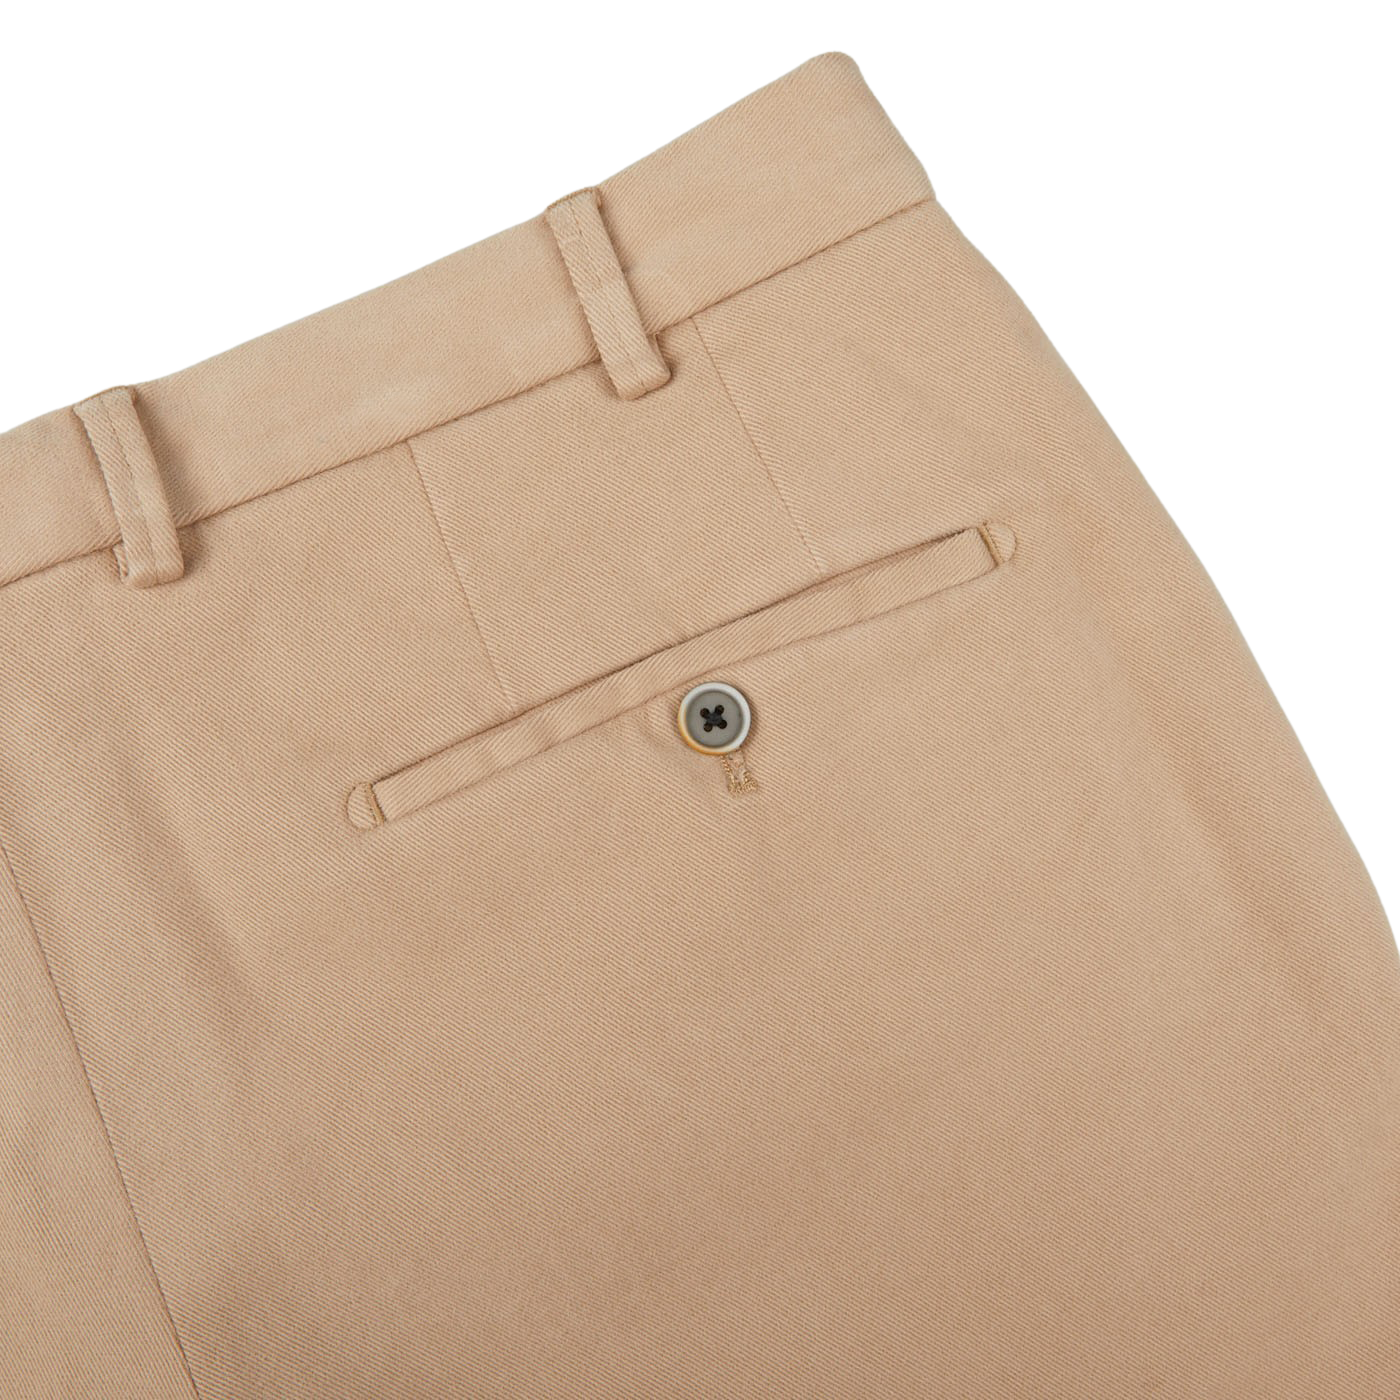 A close up of Hiltl light beige cotton stretch regular fit chinos.